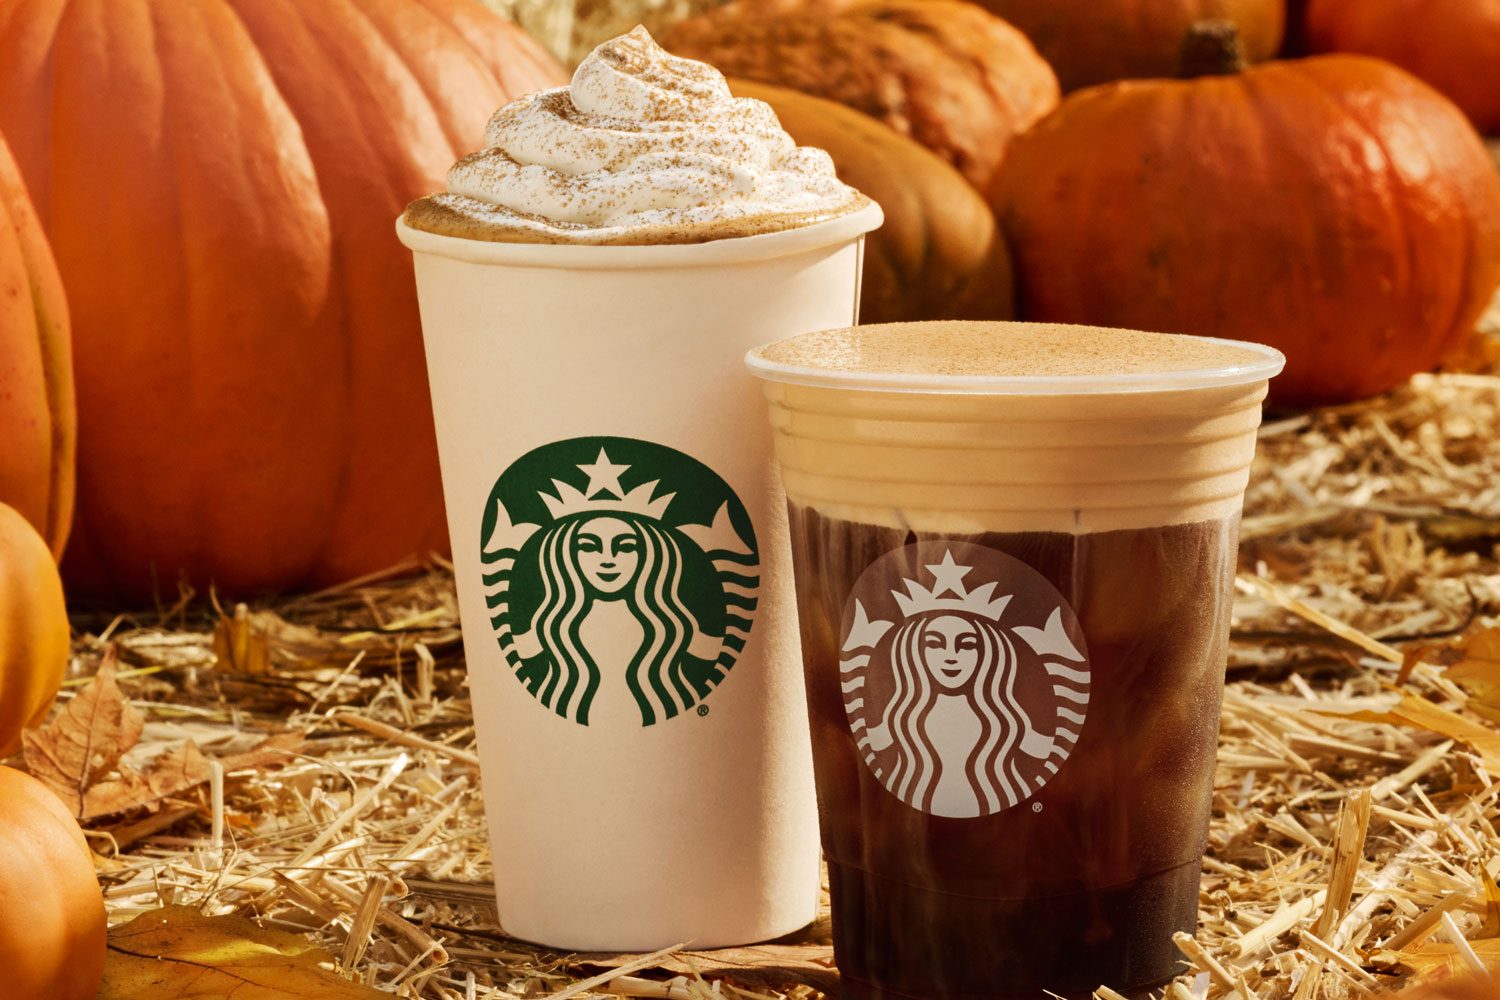 https://www.tasteofhome.com/wp-content/uploads/2022/08/Starbucks-Pumpkin-PSL-Pumpkin-Cream-Cold-Brew-Courtesy-Starbucks-Resize-Recolor-Crop-DH-TOH-PSL-Comeback.jpg